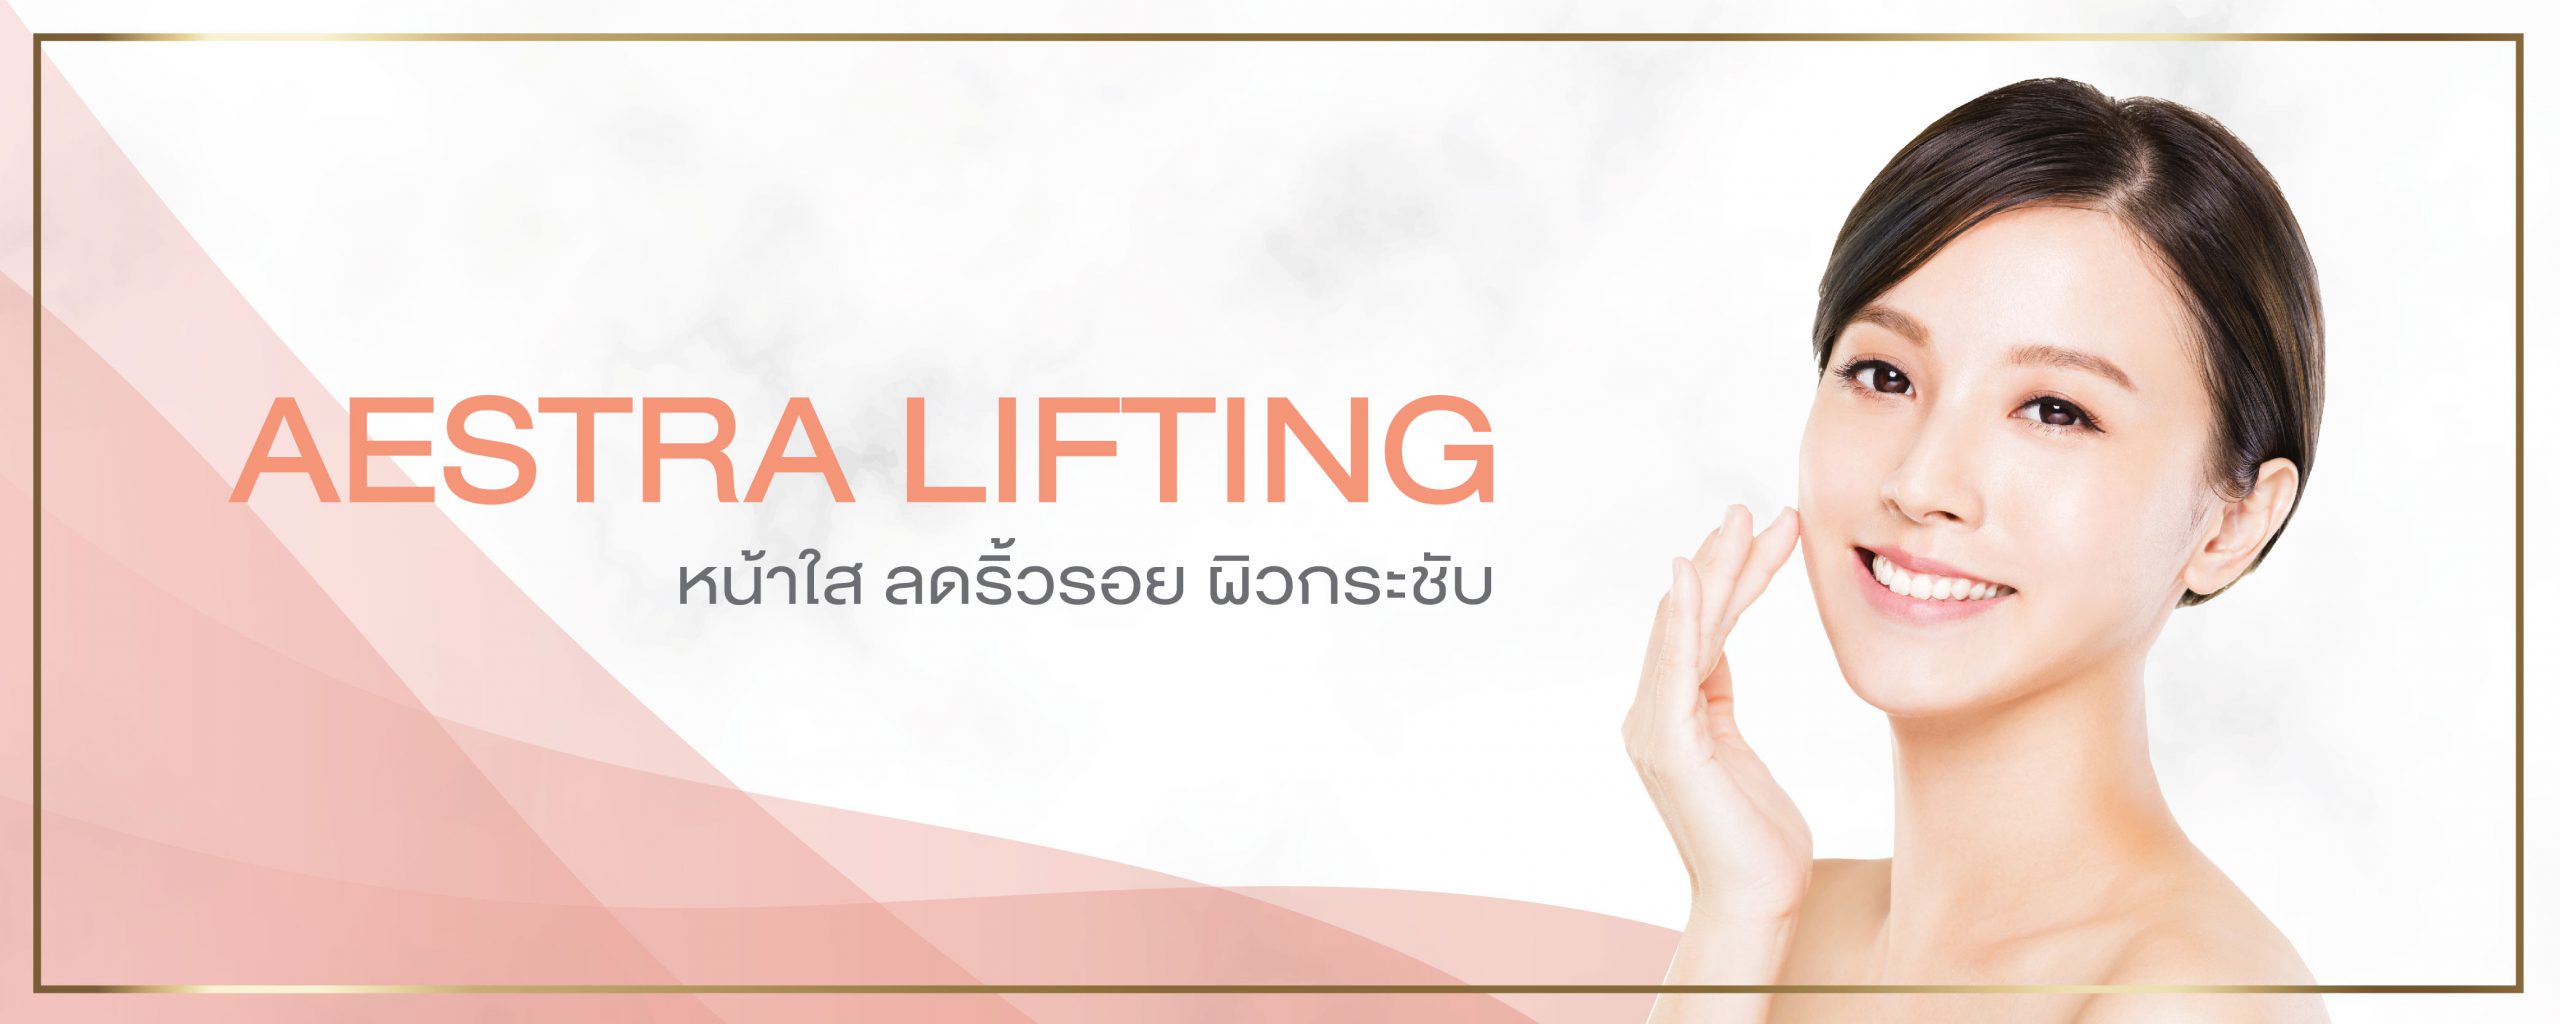 web_aestra lifting_1000x400-01